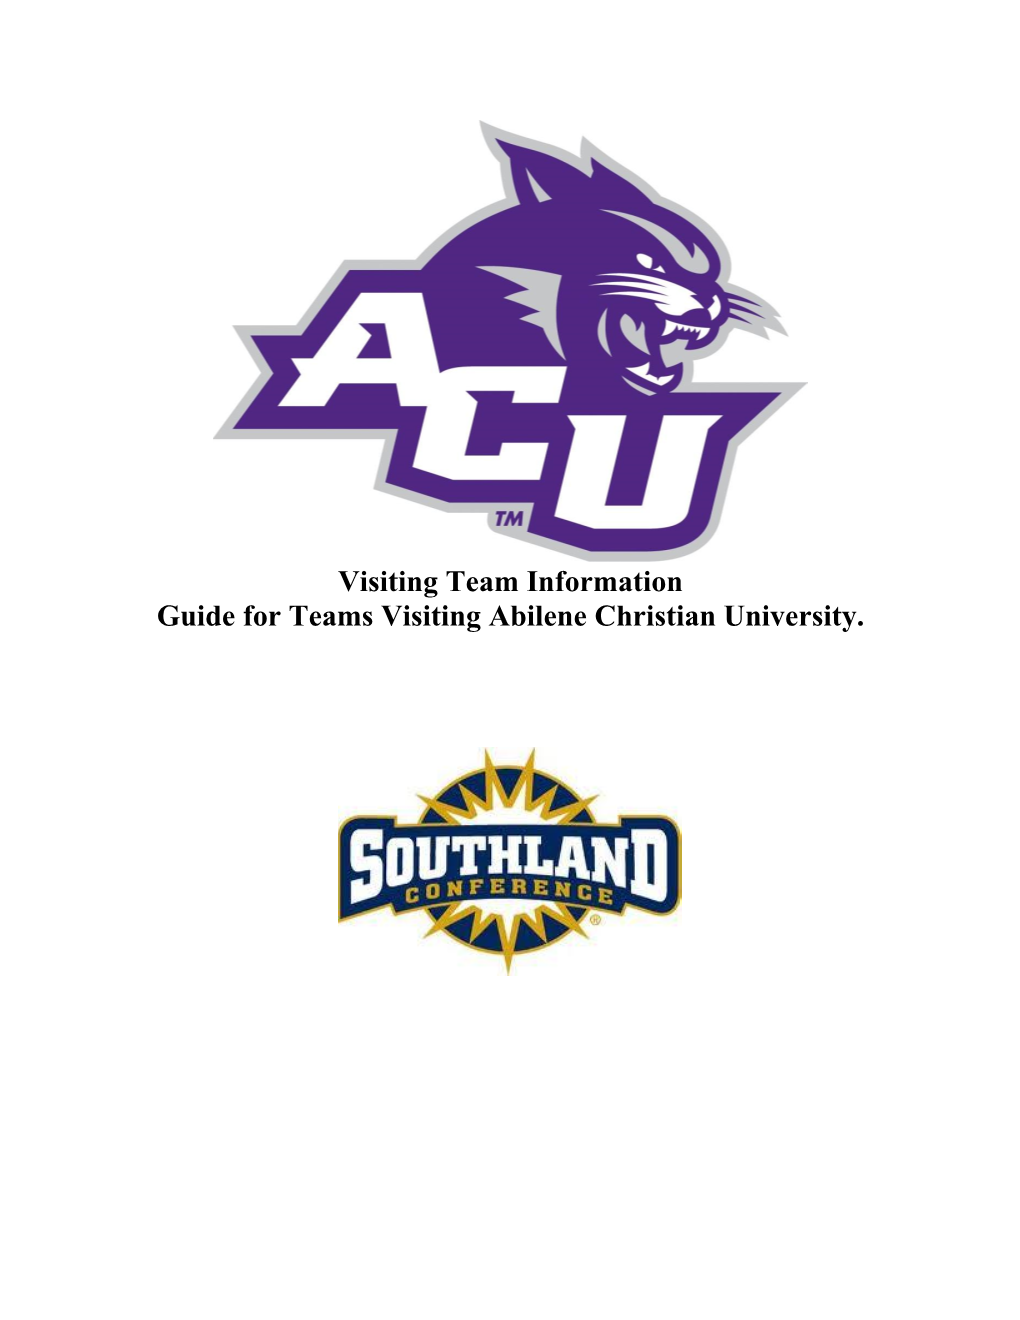 Visiting Team Information Guide for Teams Visiting Abilene Christian University